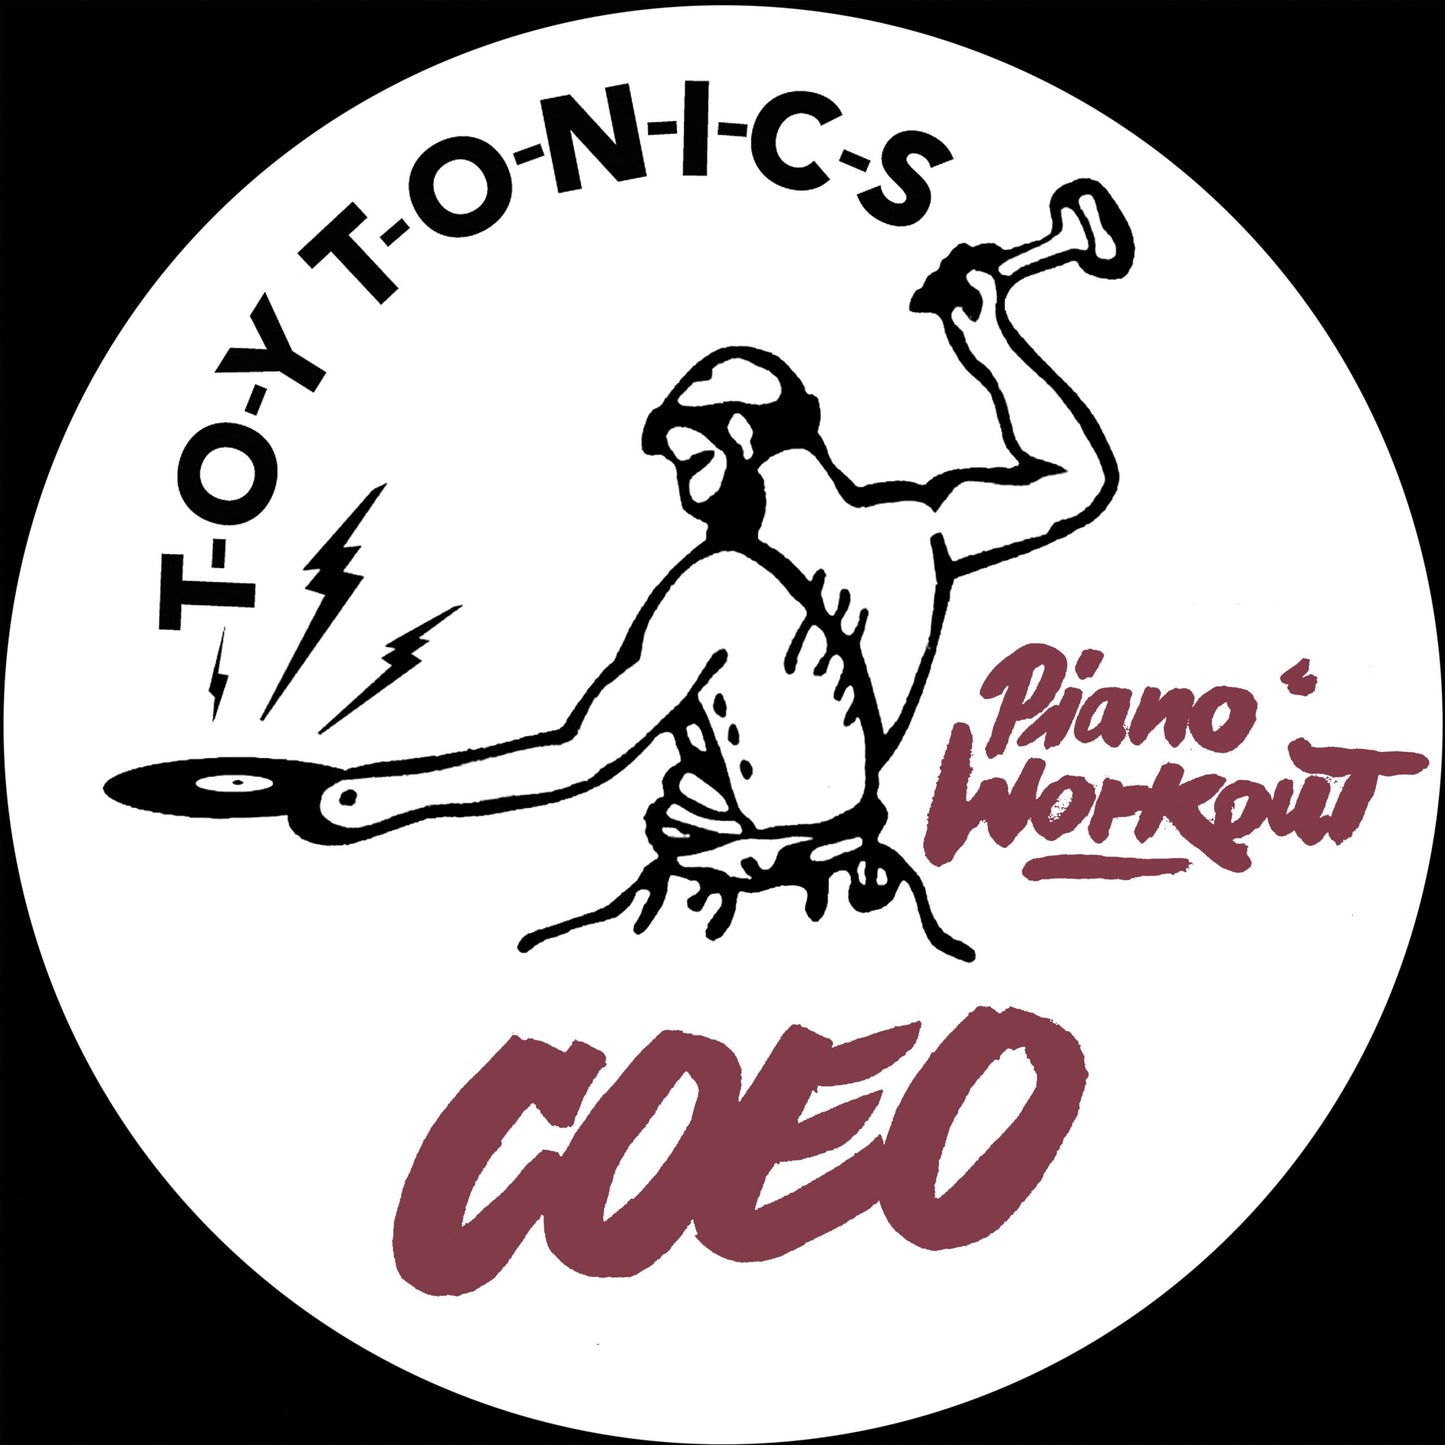 COEO - Piano Workout (12" Vinyl)